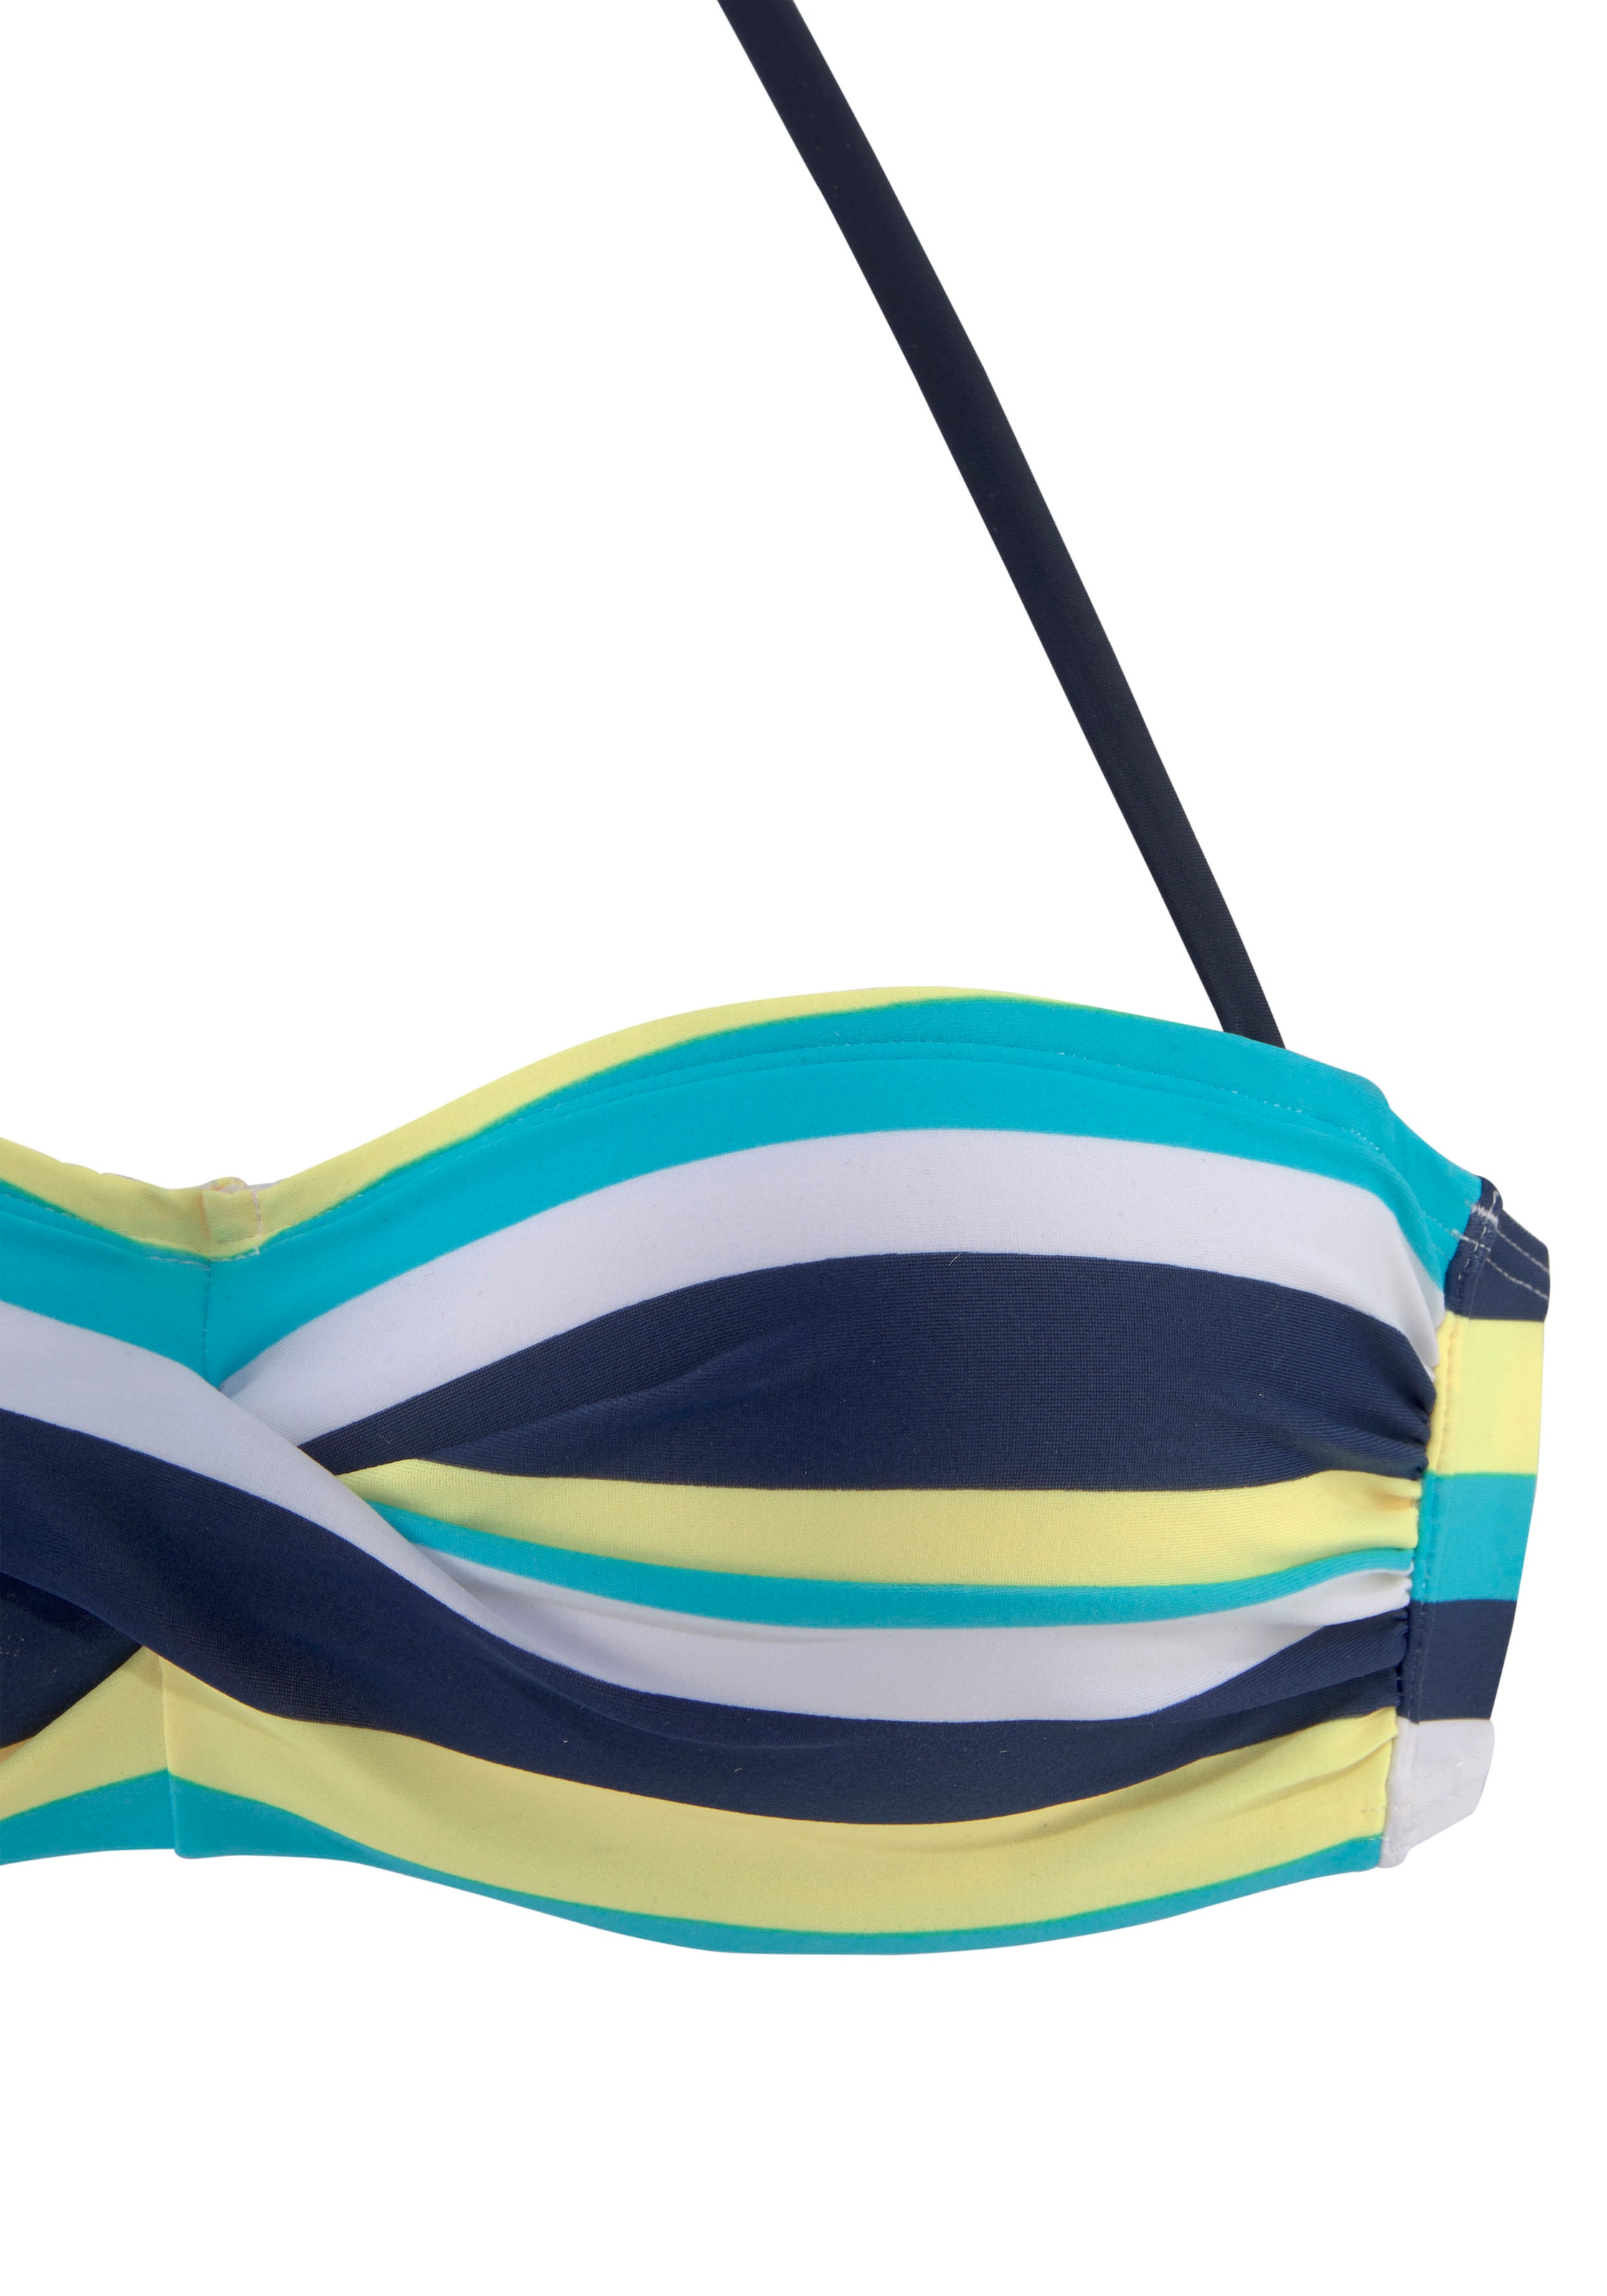 Venice Beach Bandeau-Bikini, mit Streifen